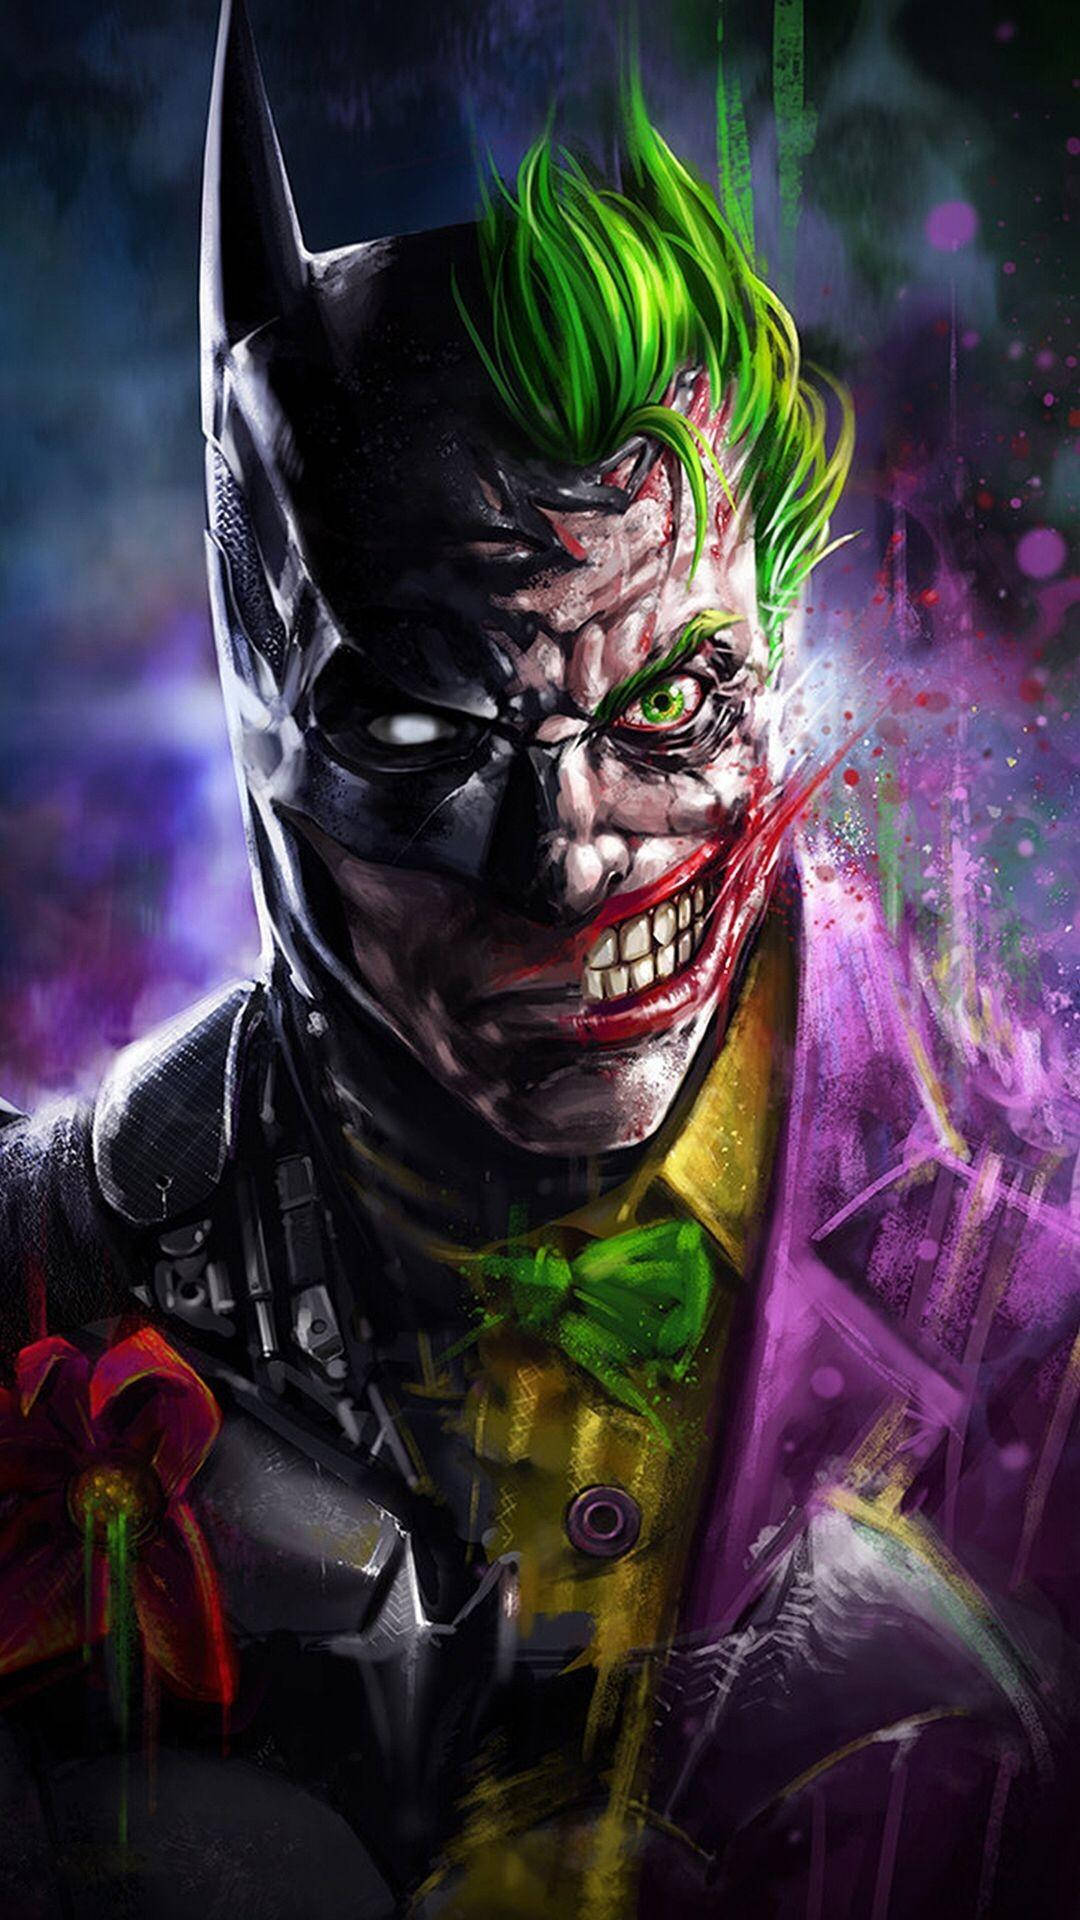 1080X1920 Joker Wallpaper and Background